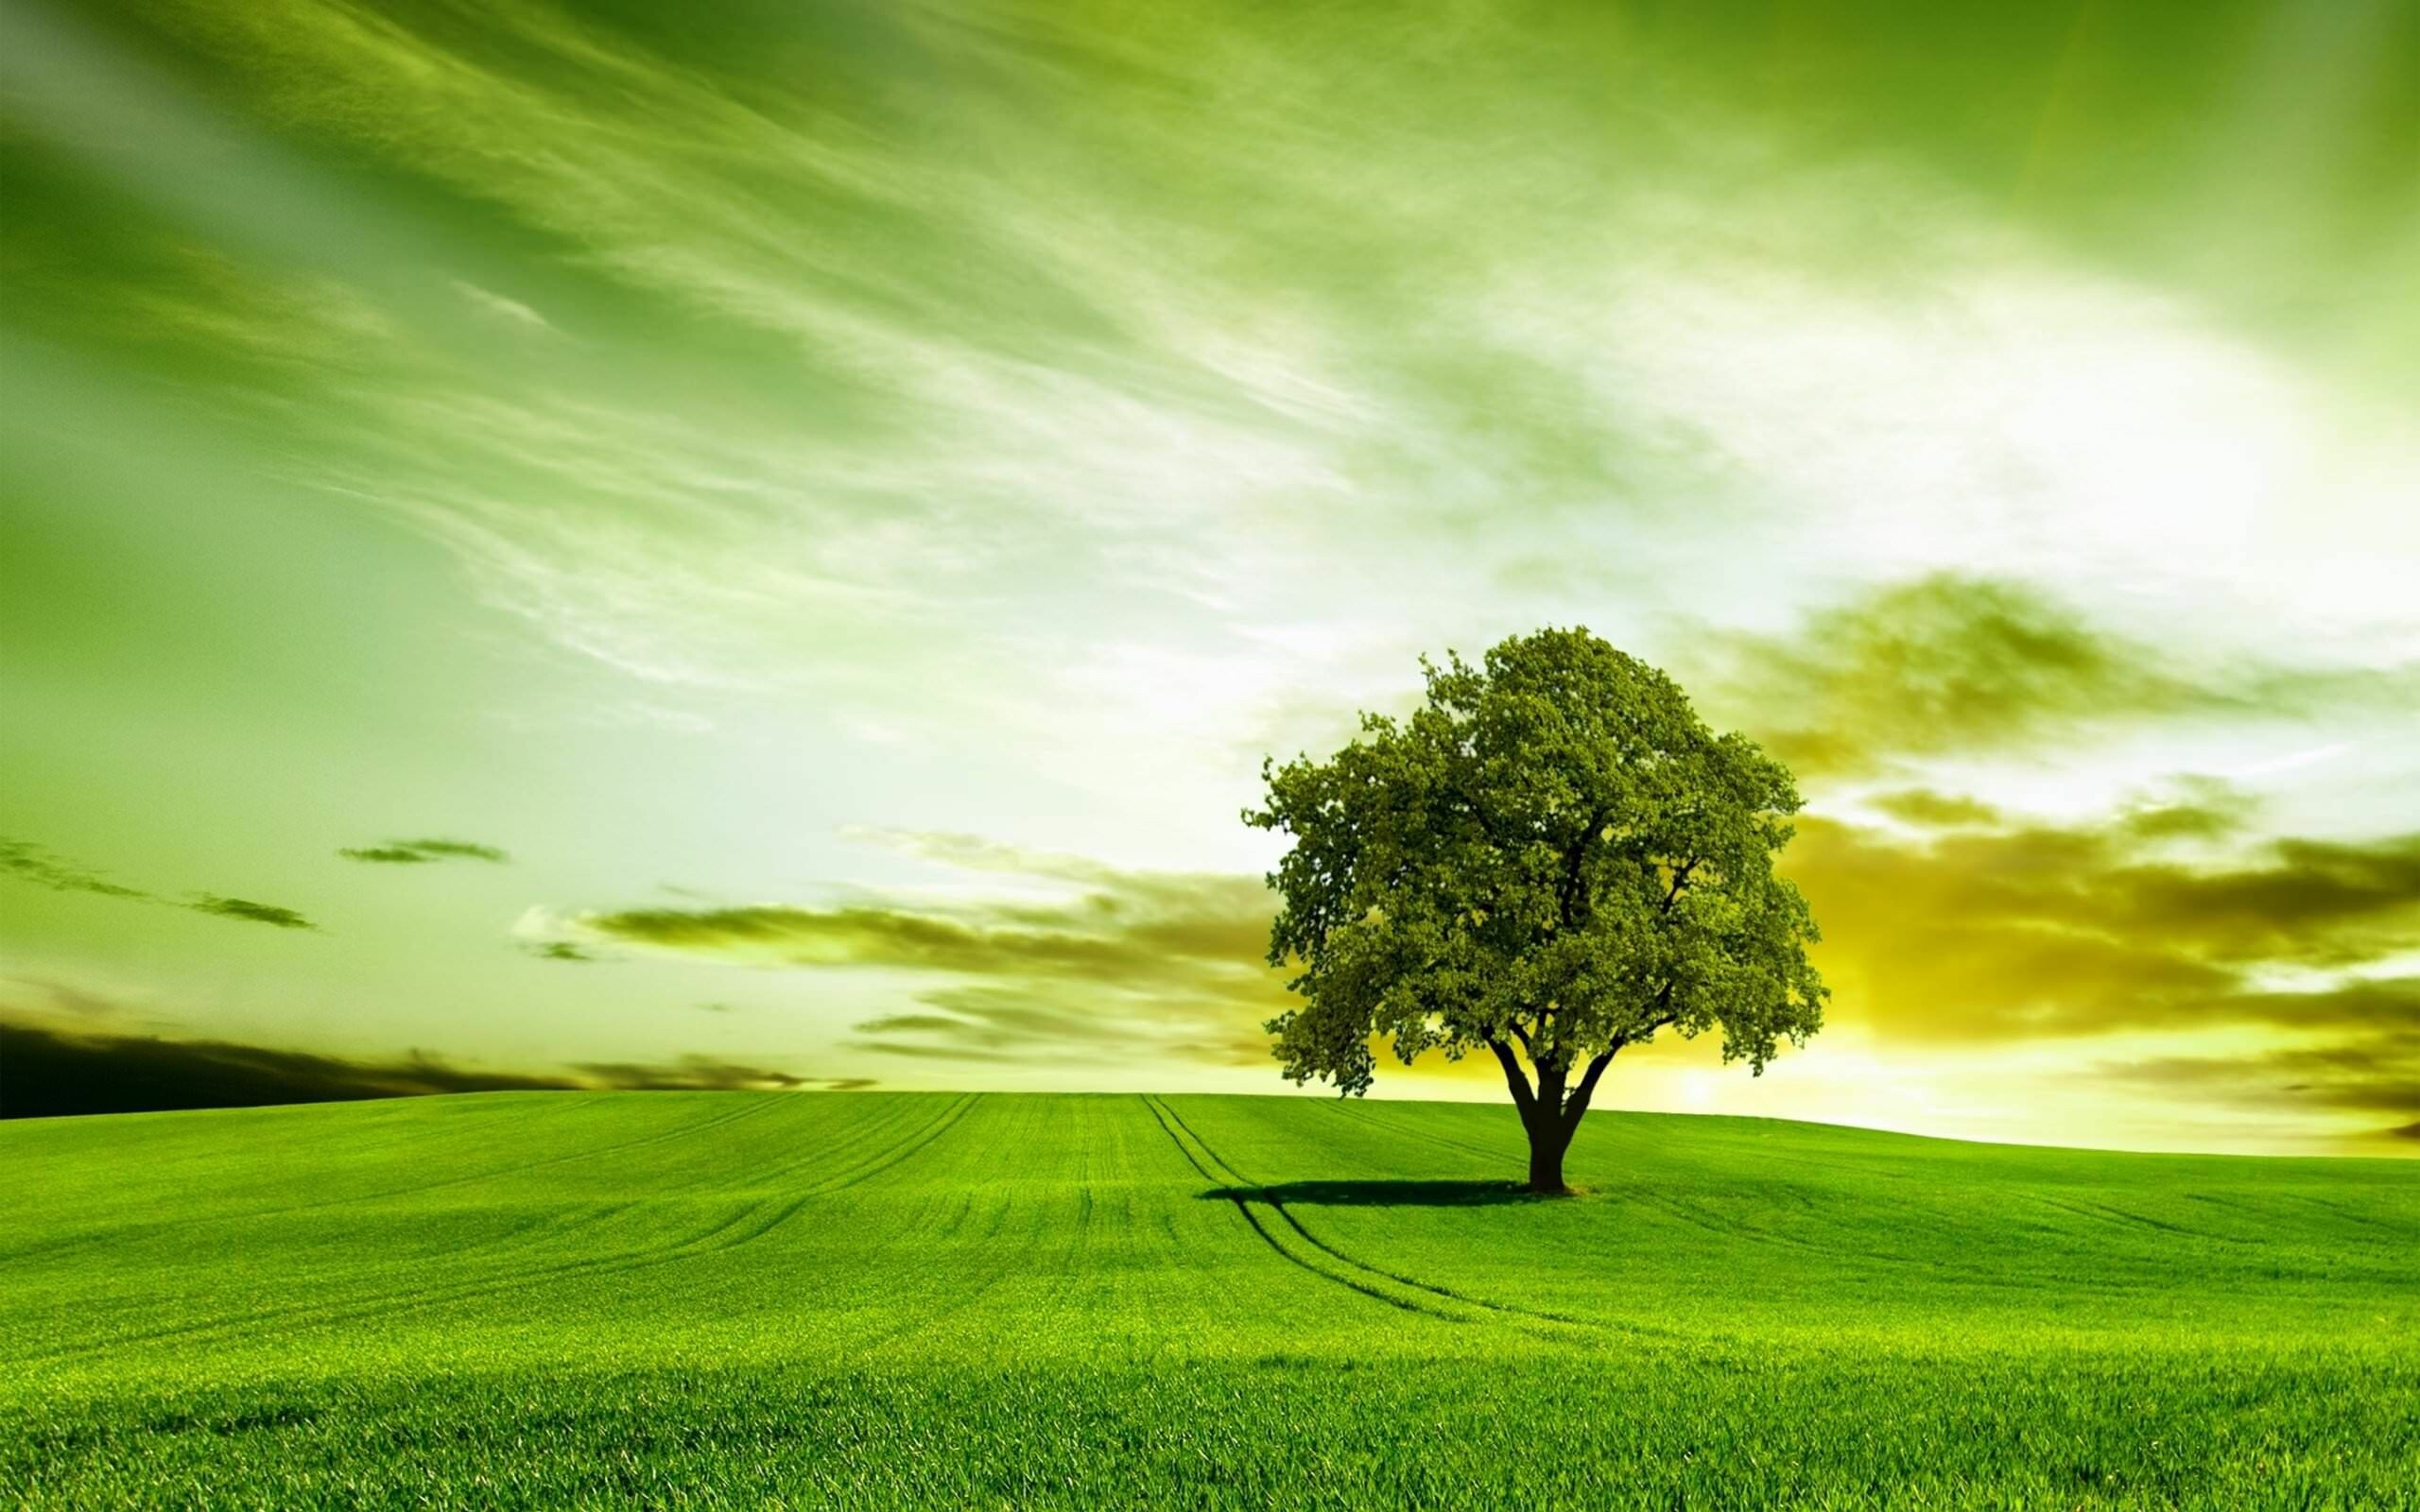 Green tree, HD wallpapers, Amazing nature photos, Green nature, 2560x1600 HD Desktop